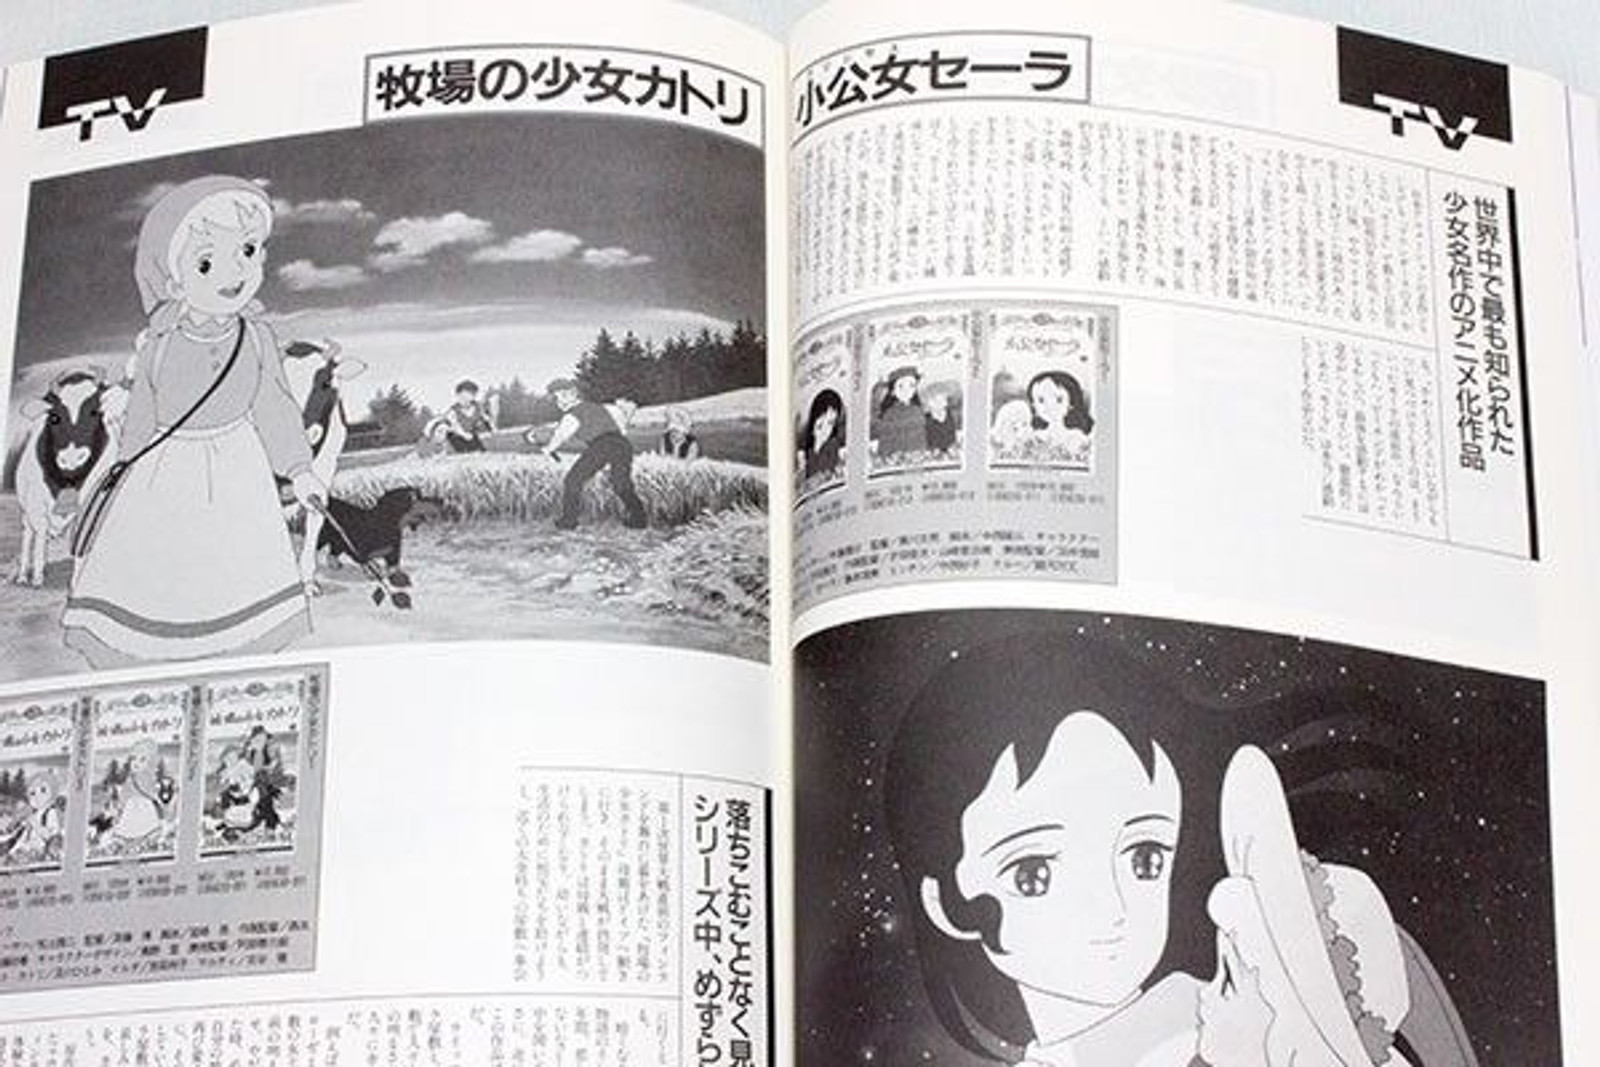 Emotion 1988 Animation Video Tape Perfect Catalog Book B-Club JAPAN ANIME MANGA